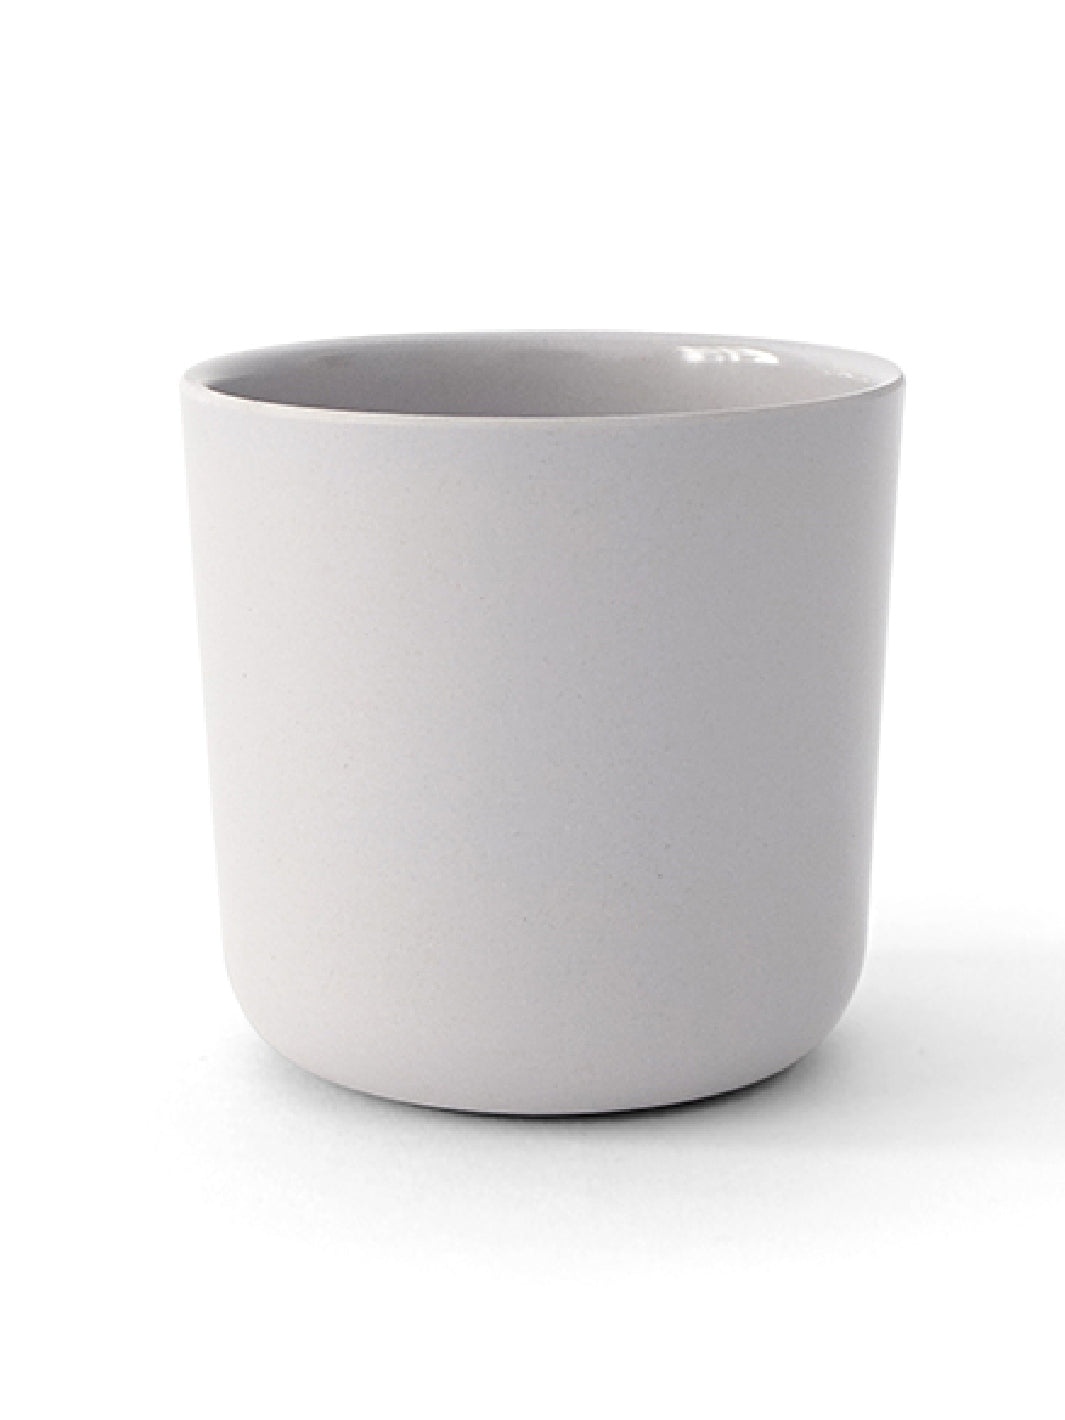 EKOBO Bambino Small Cup Set (4 cups)